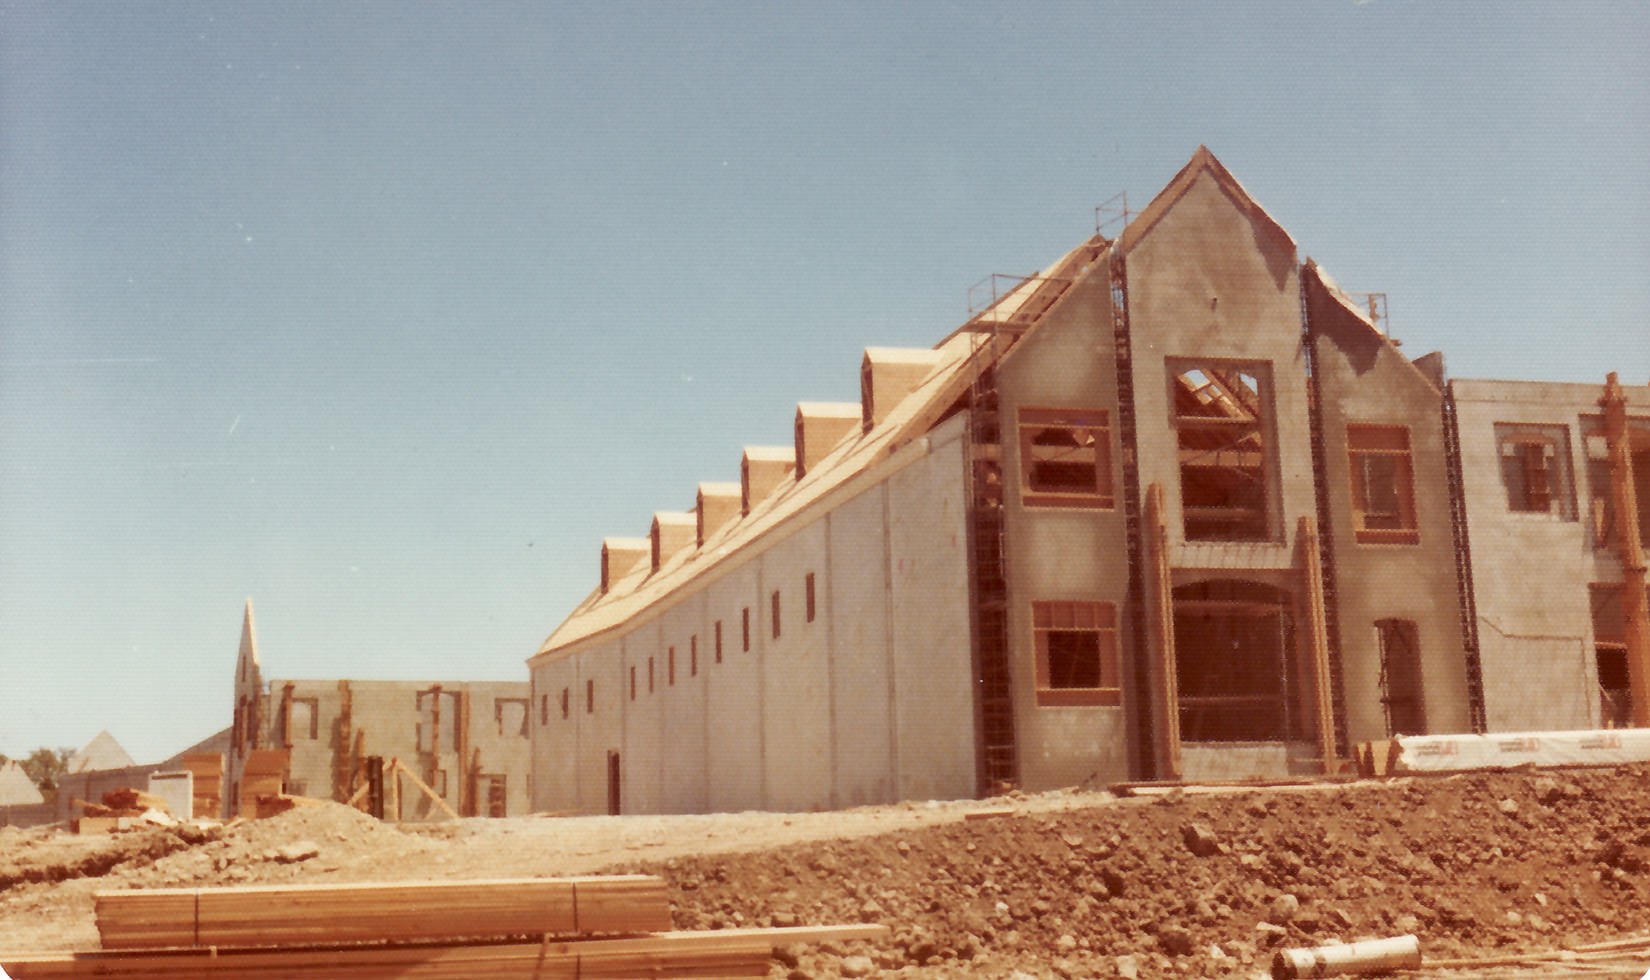 Jordan Winery chateau construction, 1975-1976